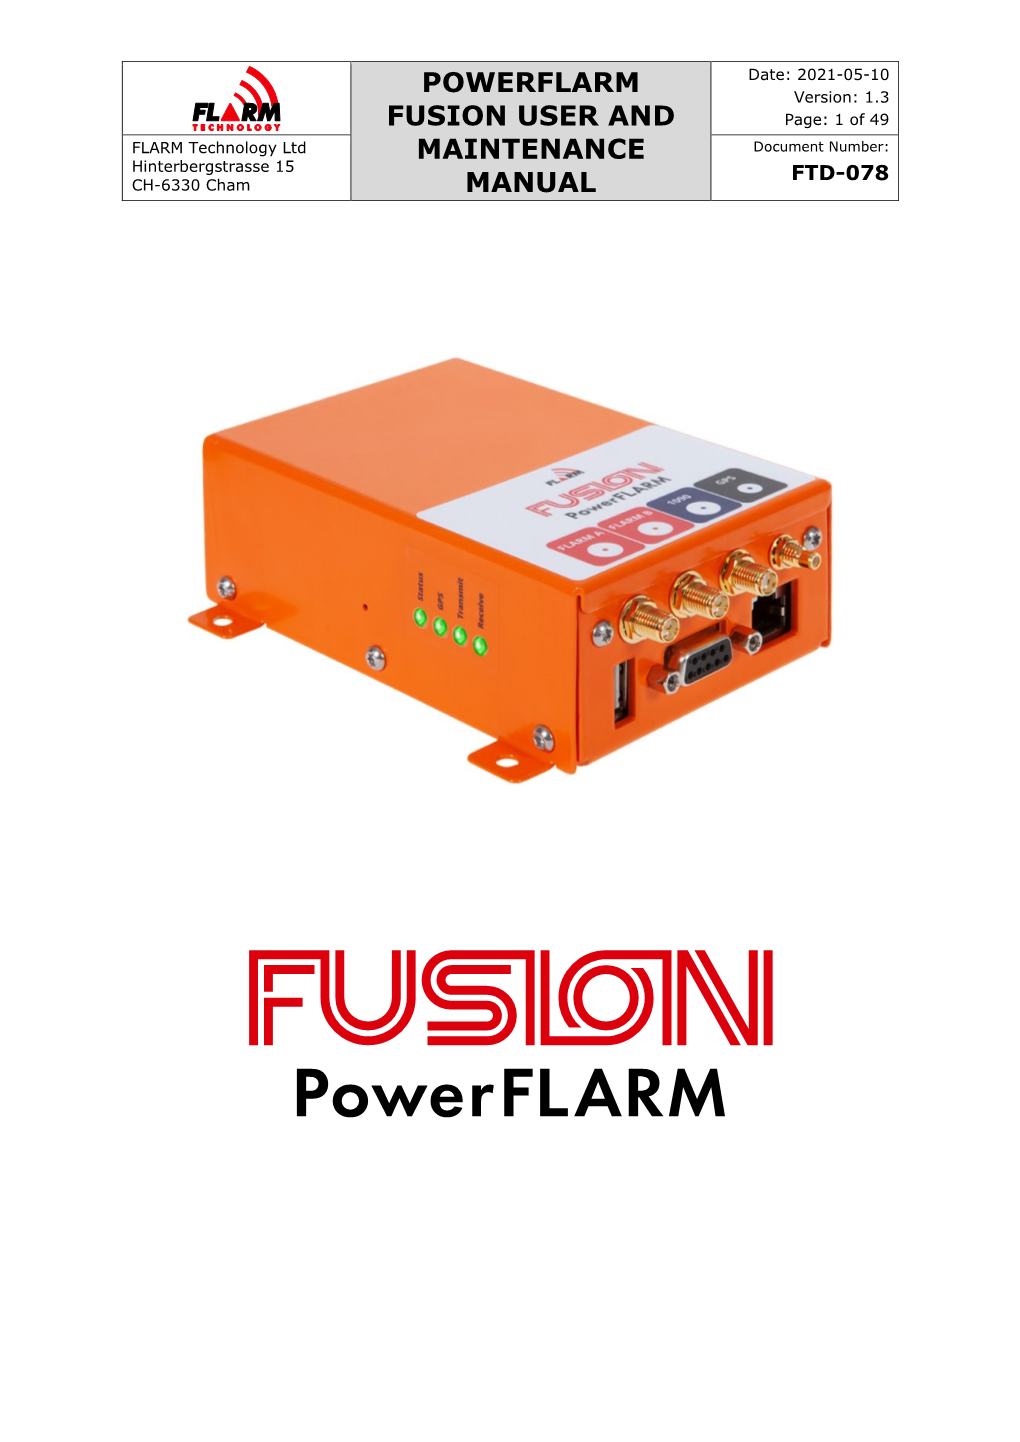 Powerflarm Fusion User and Maintenance Manual